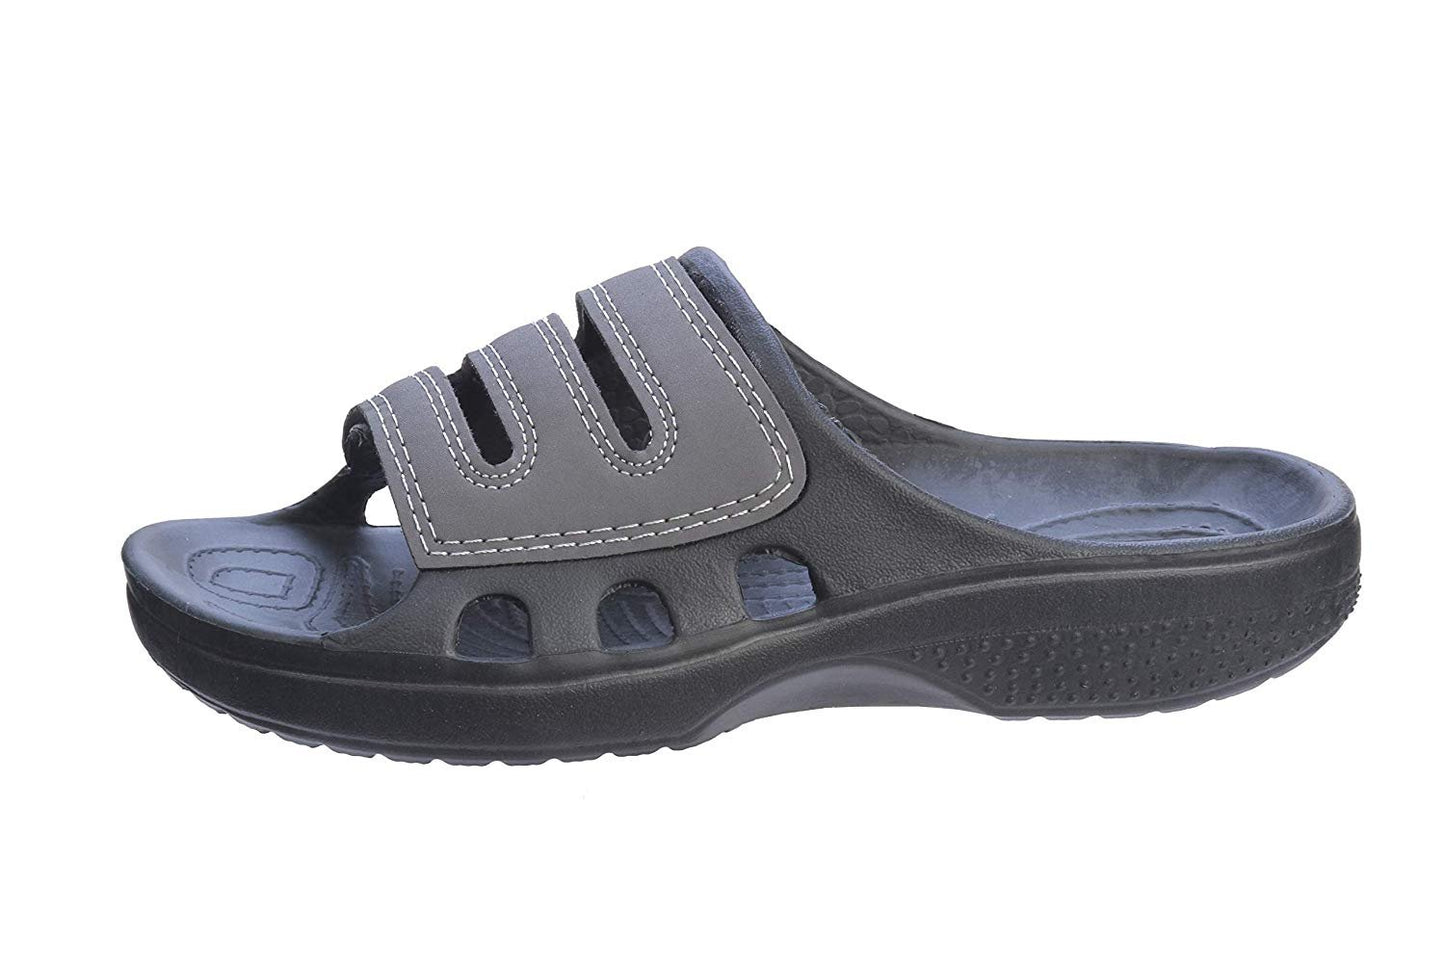 Boy's Waterproof Slippers Shower Pool Rubber Clog Outdoor Sandals